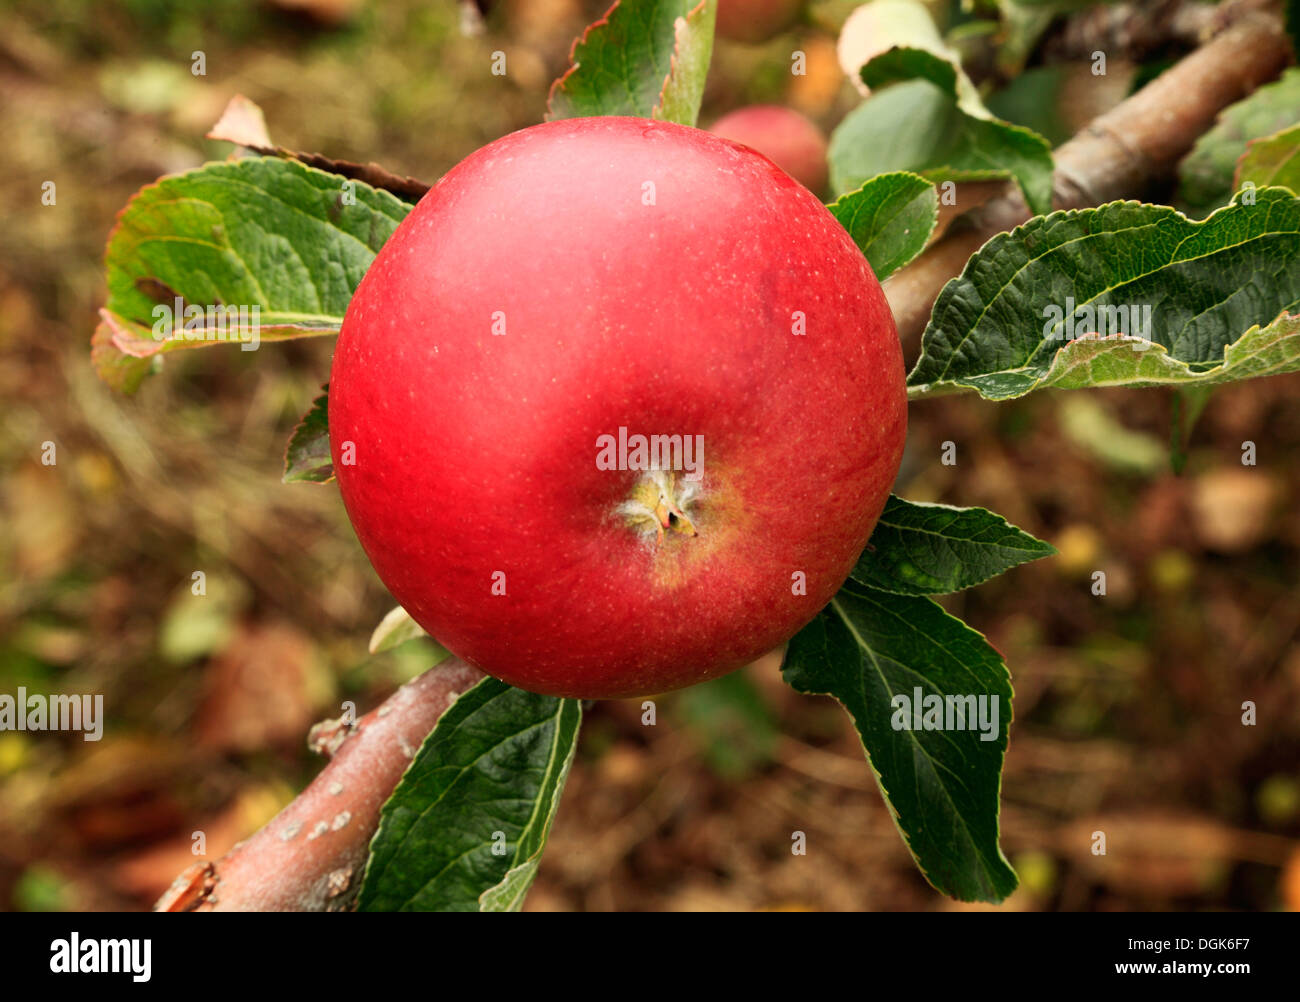 Apple 'Red Miller',  malus domestica apples variety varieties growing on tree Stock Photo